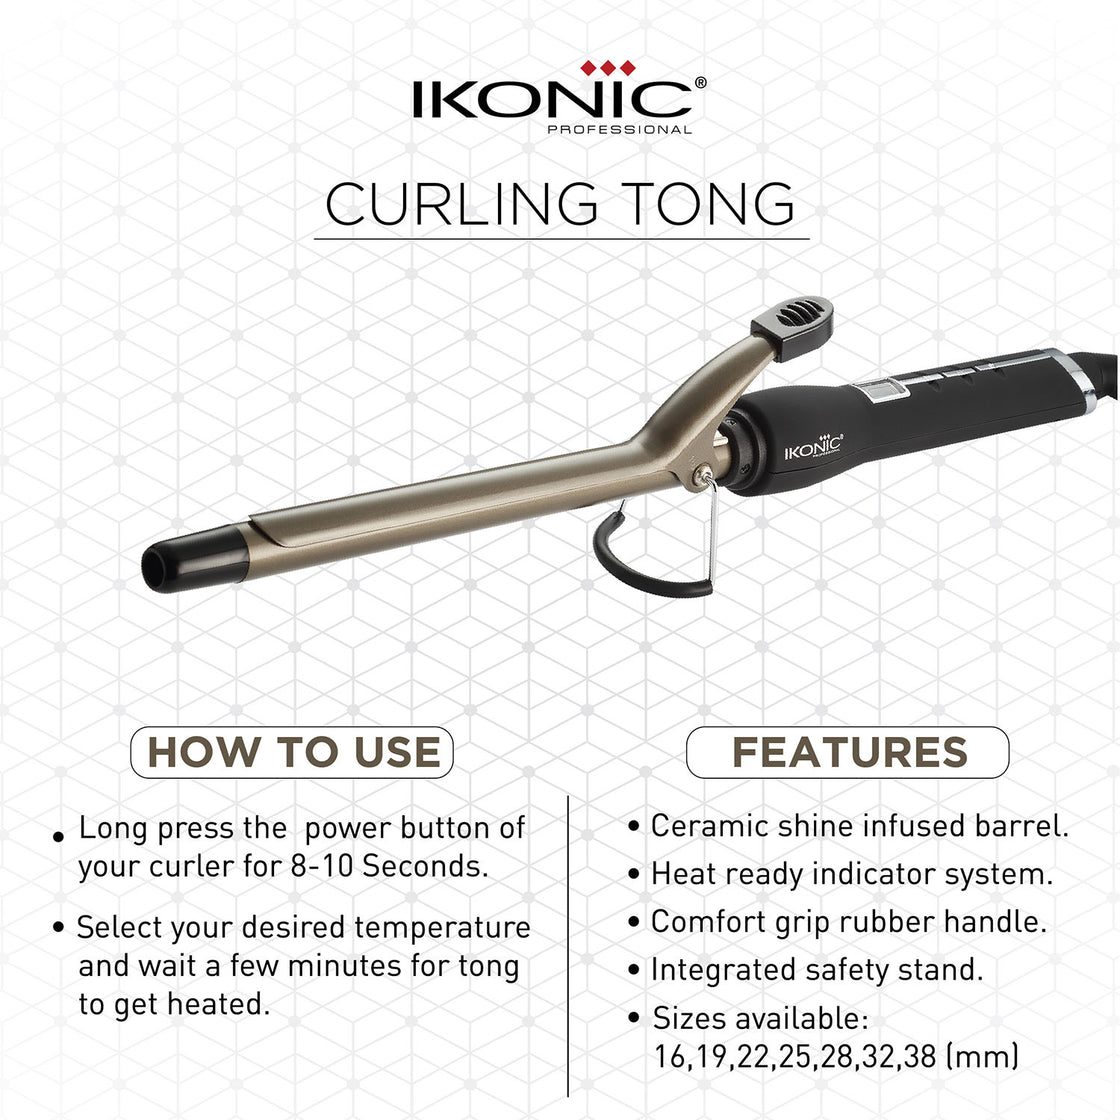 Ikonic Professional CT22 Curling Tong - Black